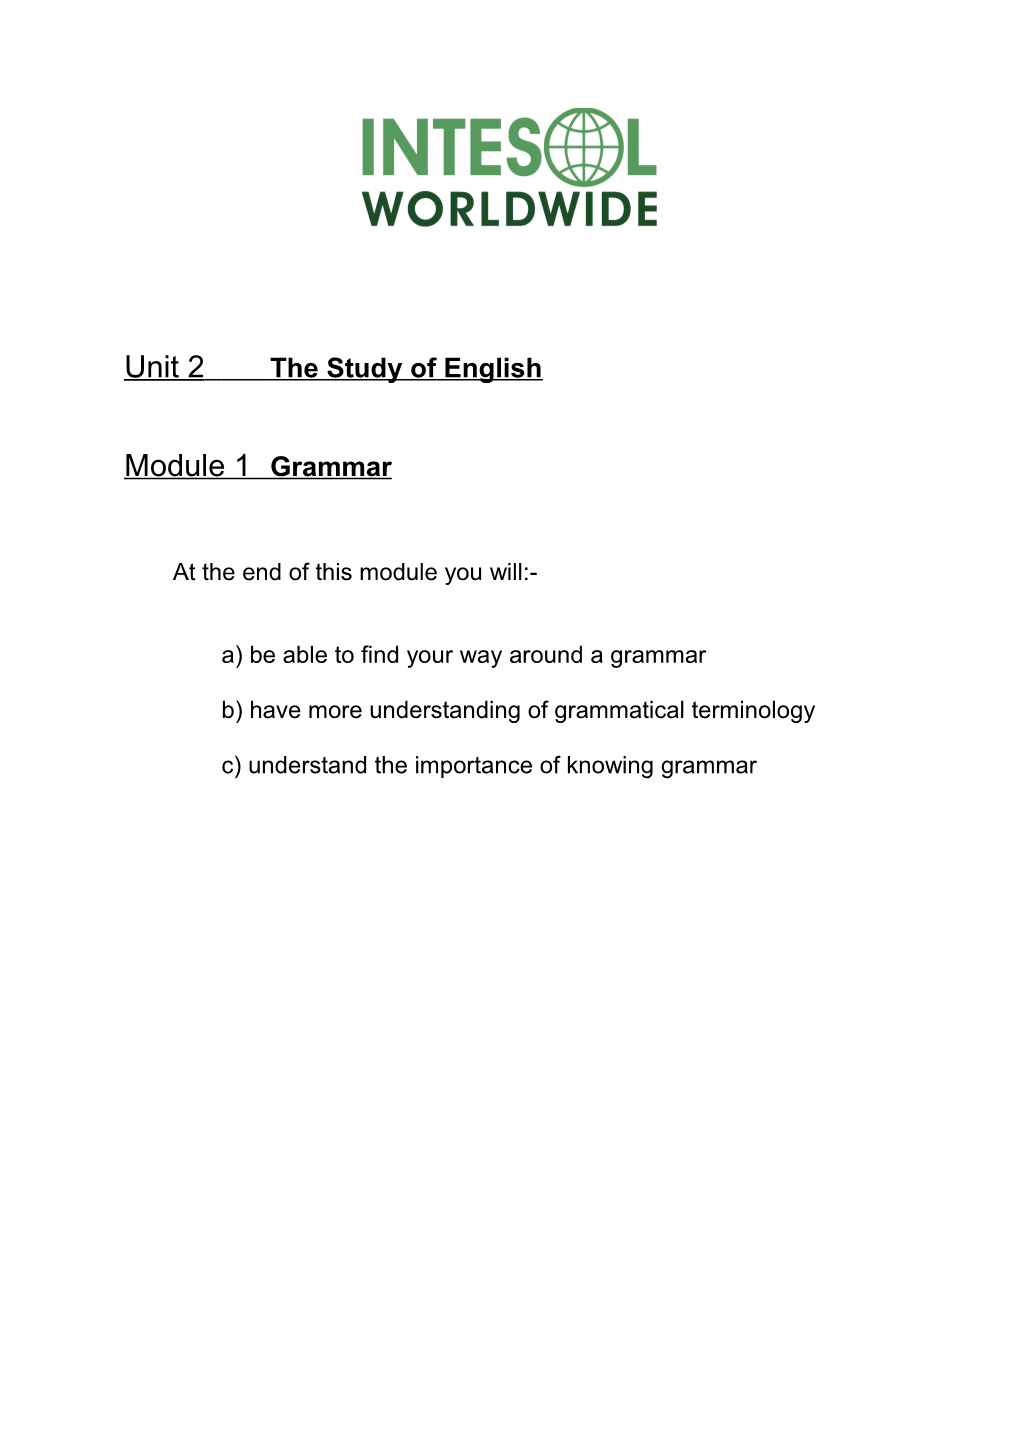 Unit 2 the Study of English